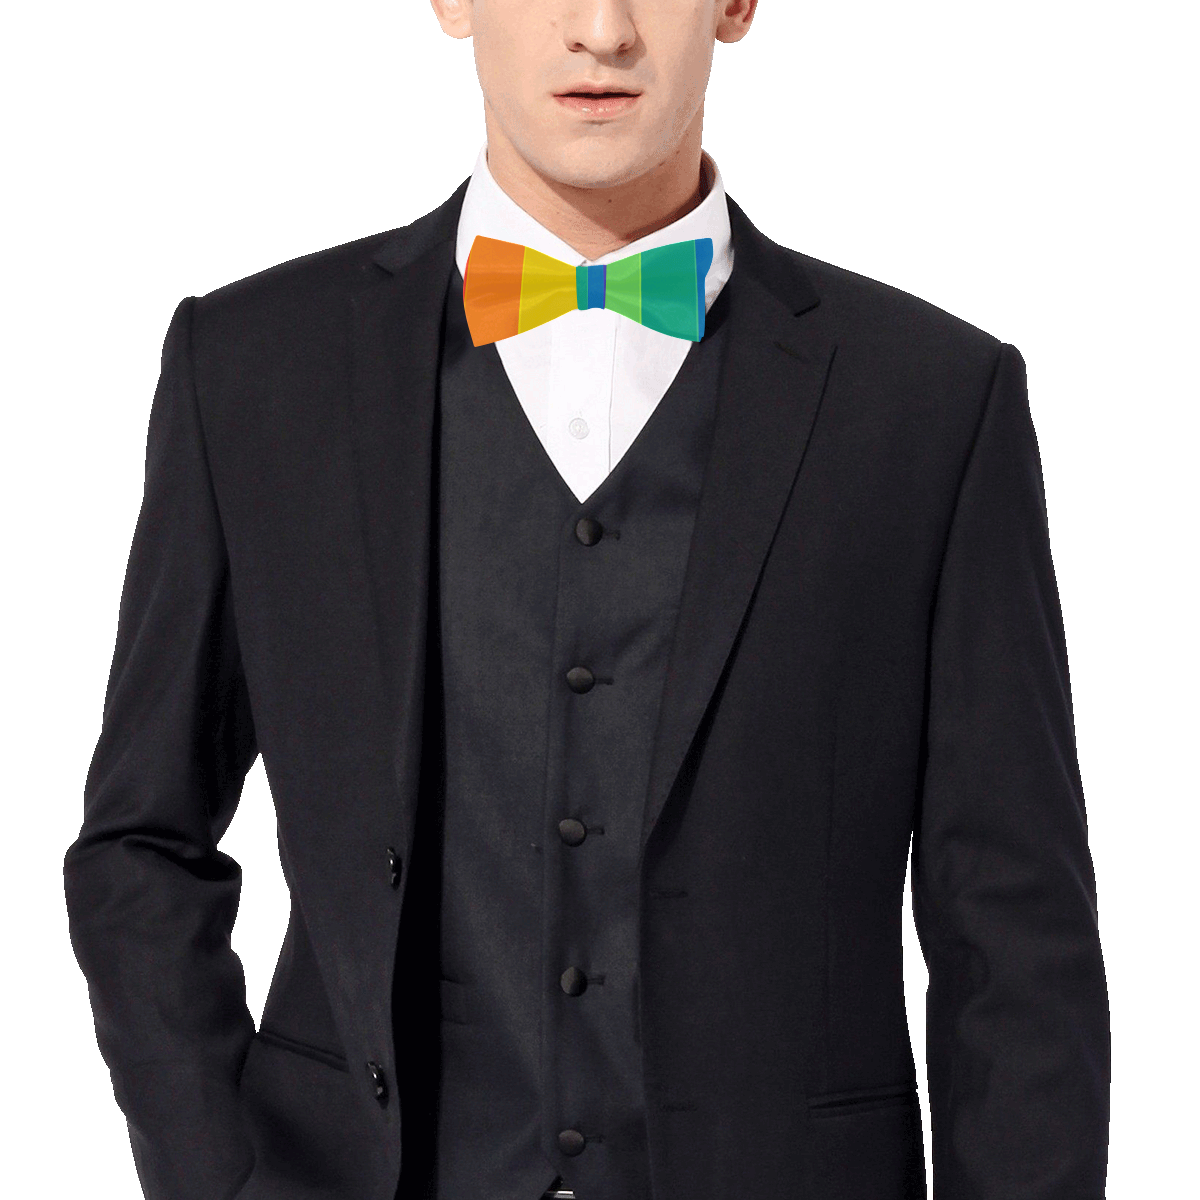 Horizontal Rainbow Custom Bow Tie